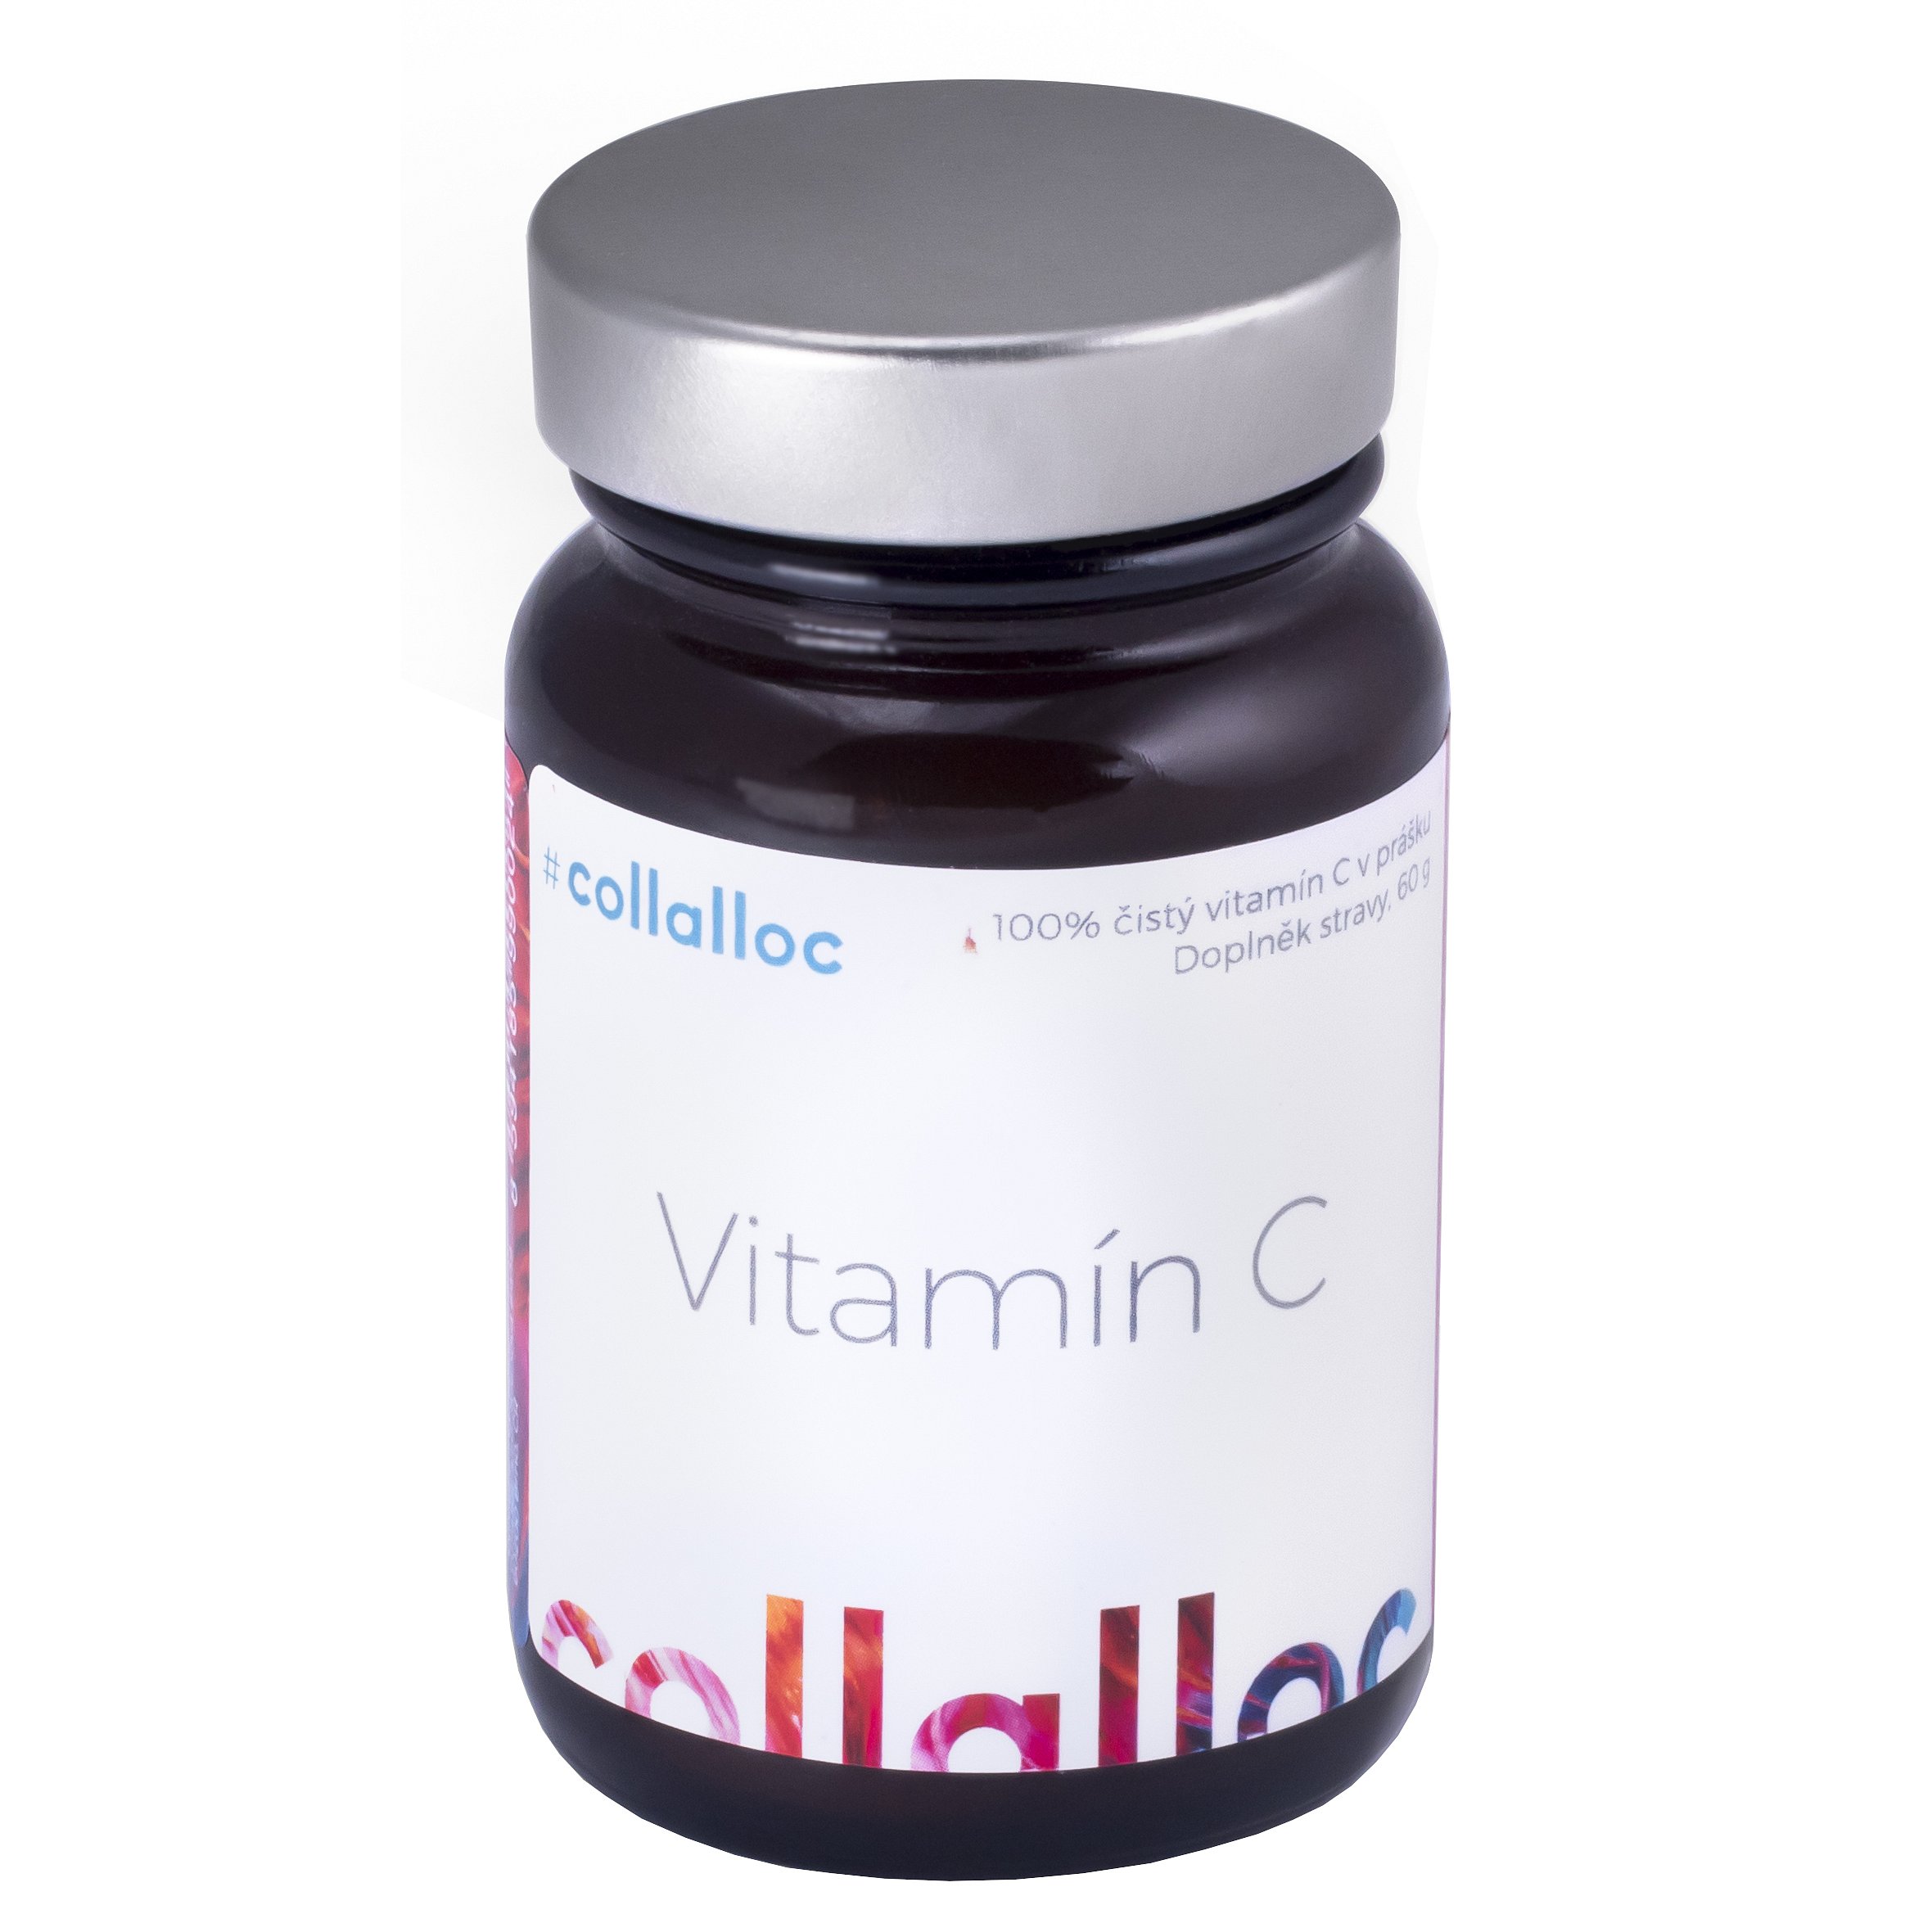 collalloc Vitamin C 60g